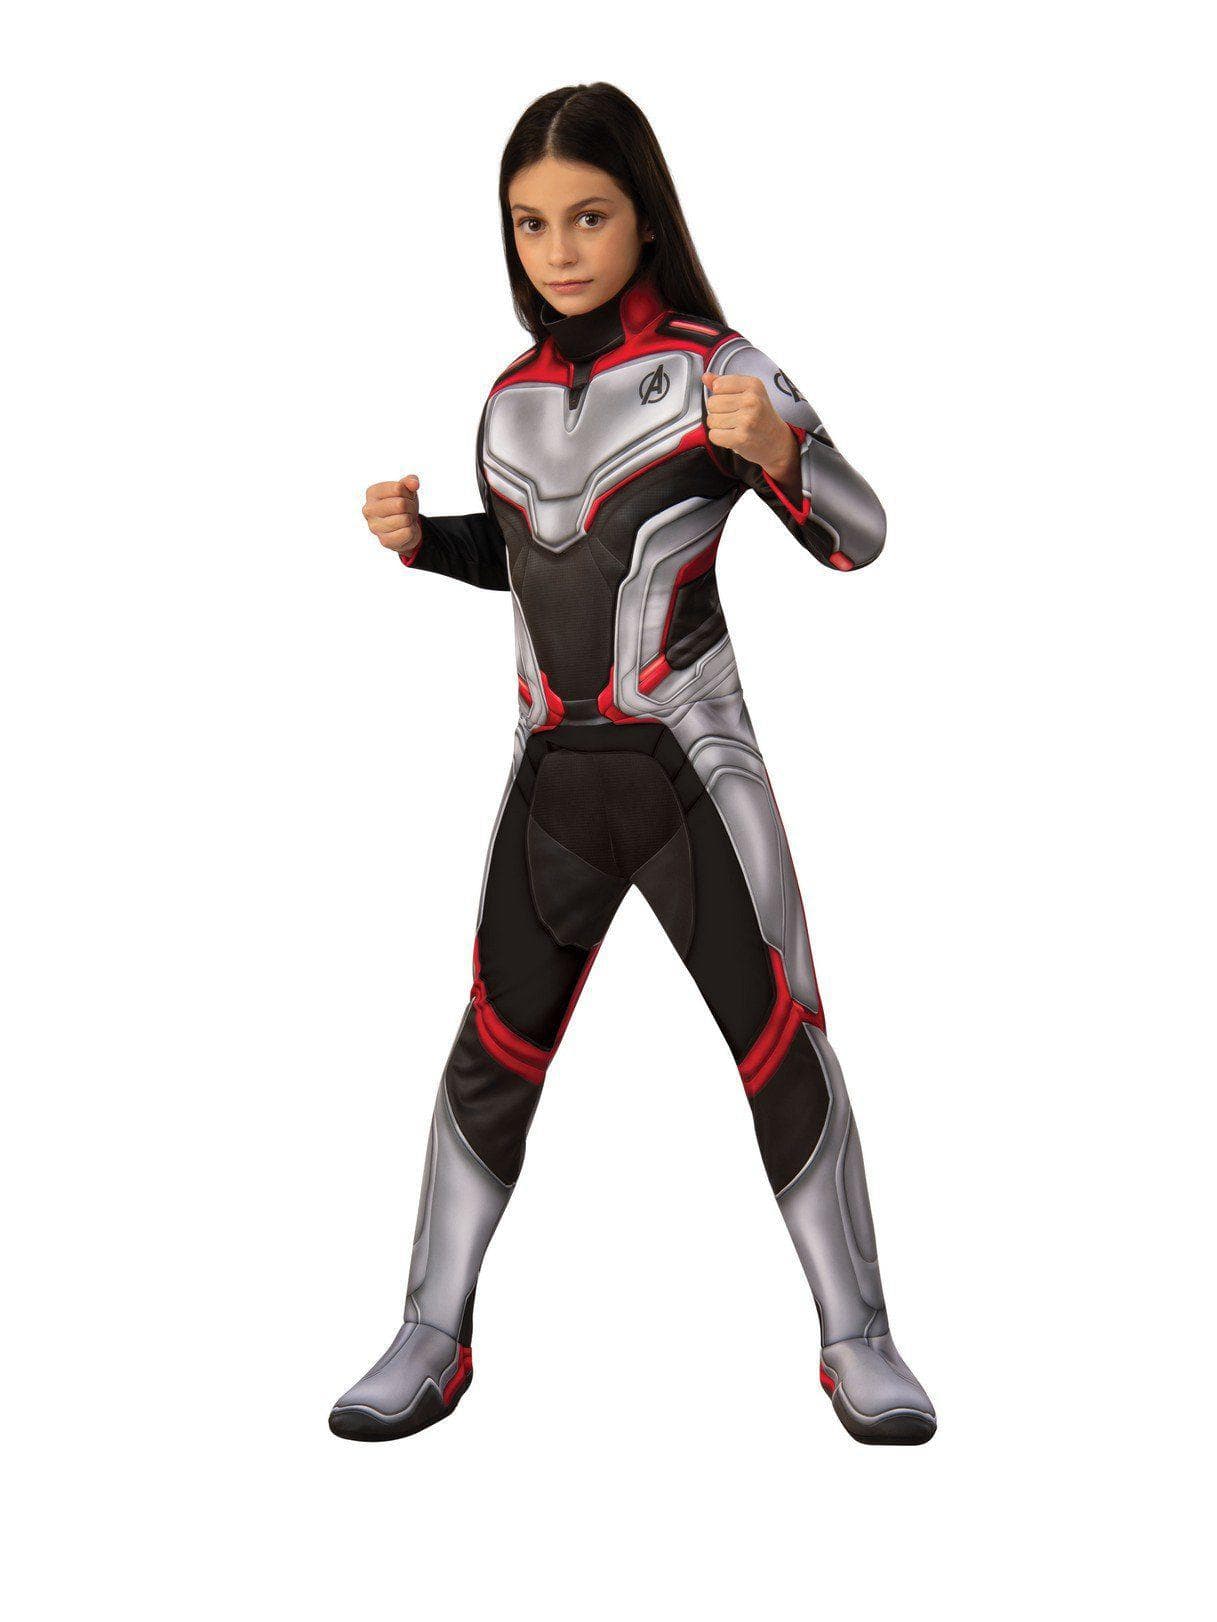 Kids Avengers Deluxe Costume - costumes.com